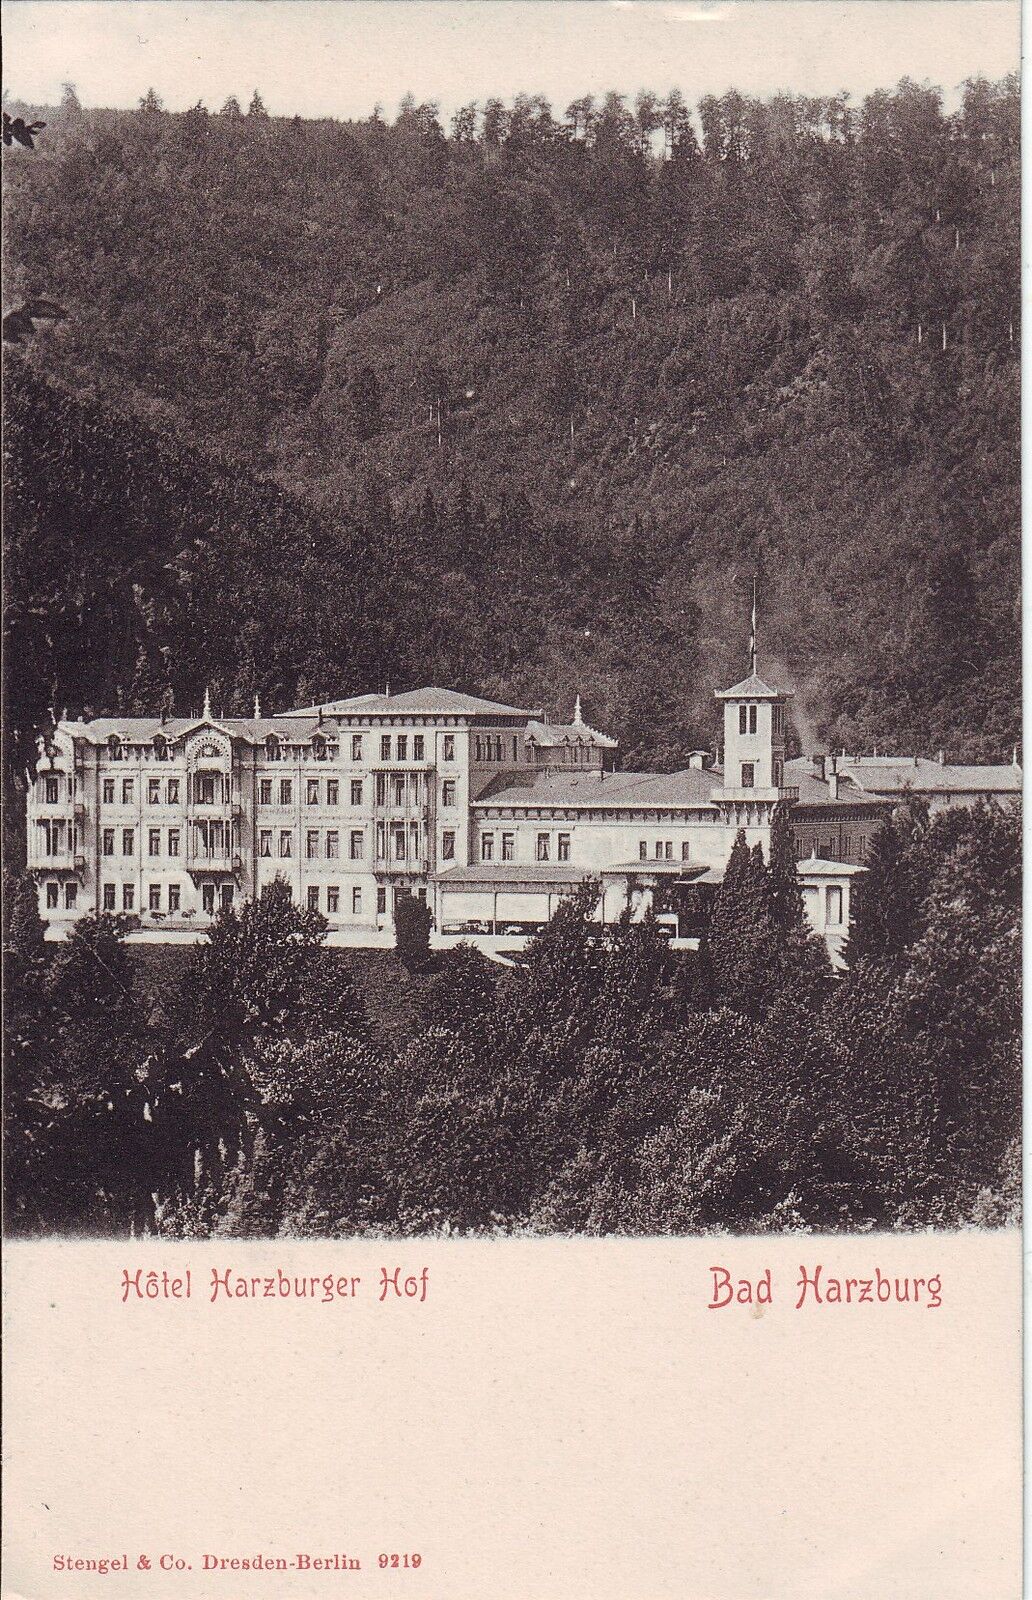 Germany AK Bad Harzburg - Hotel Harzburger Hof undivided back unused postcard